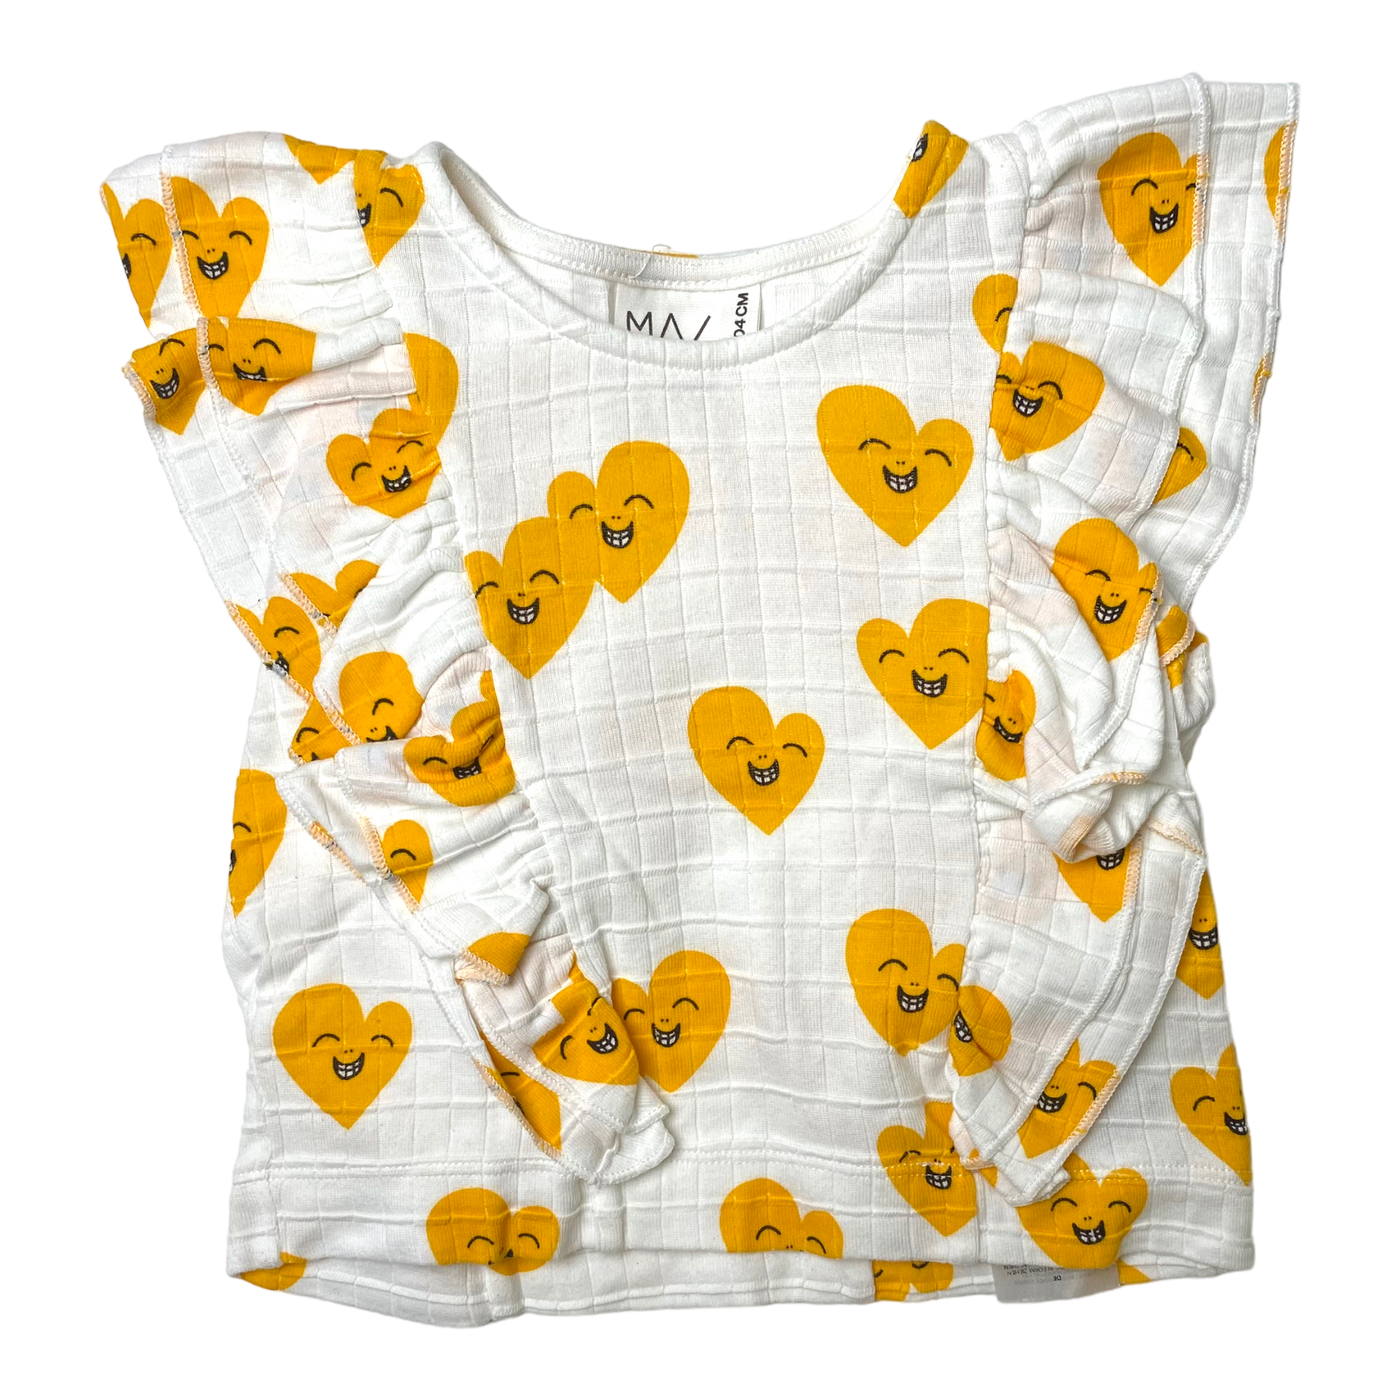 Mainio frilla t-shirt, hearts | 98/104cm